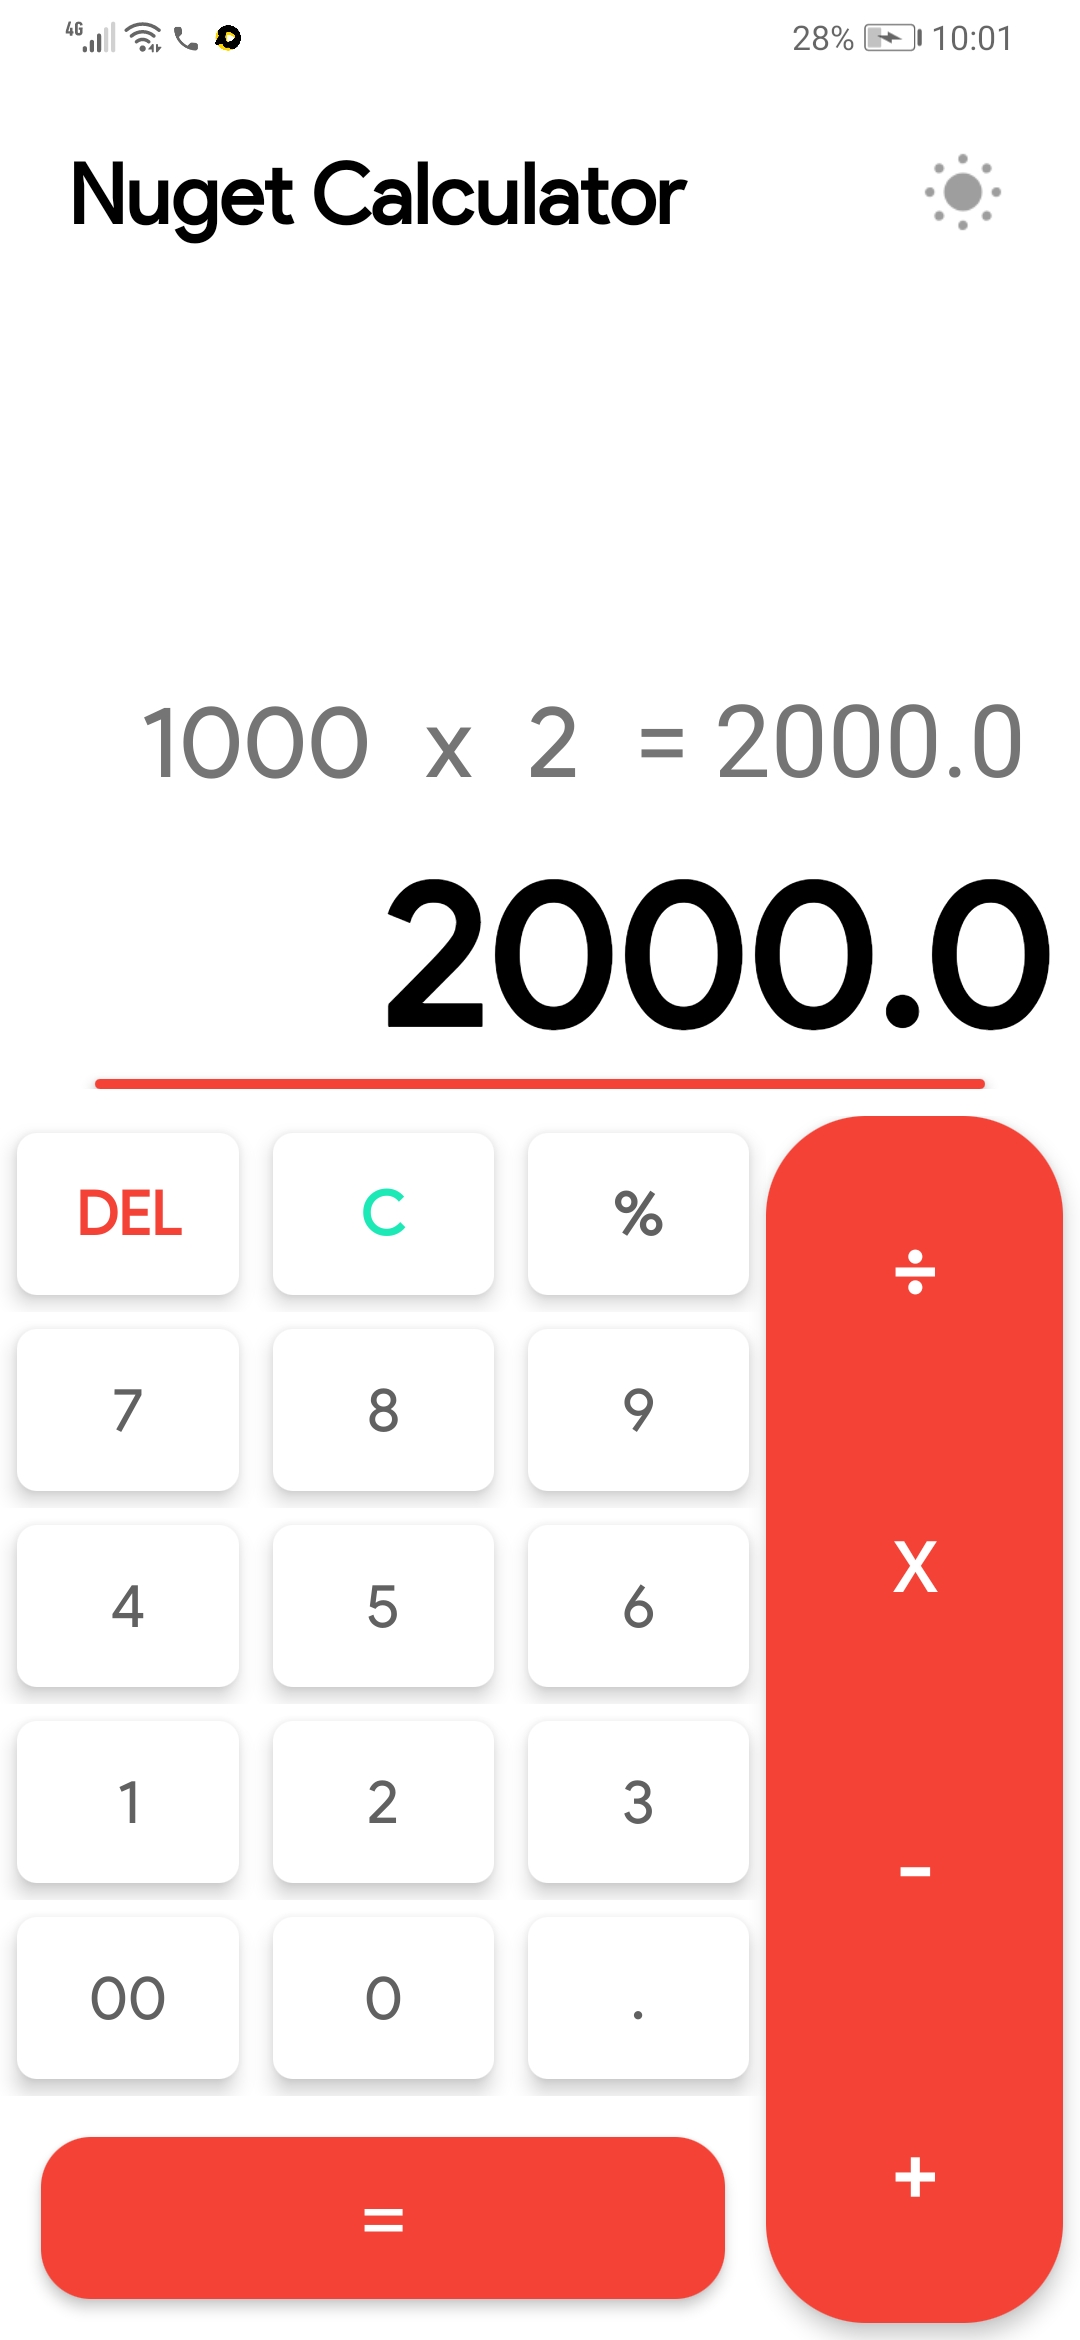 Nuget Calculator